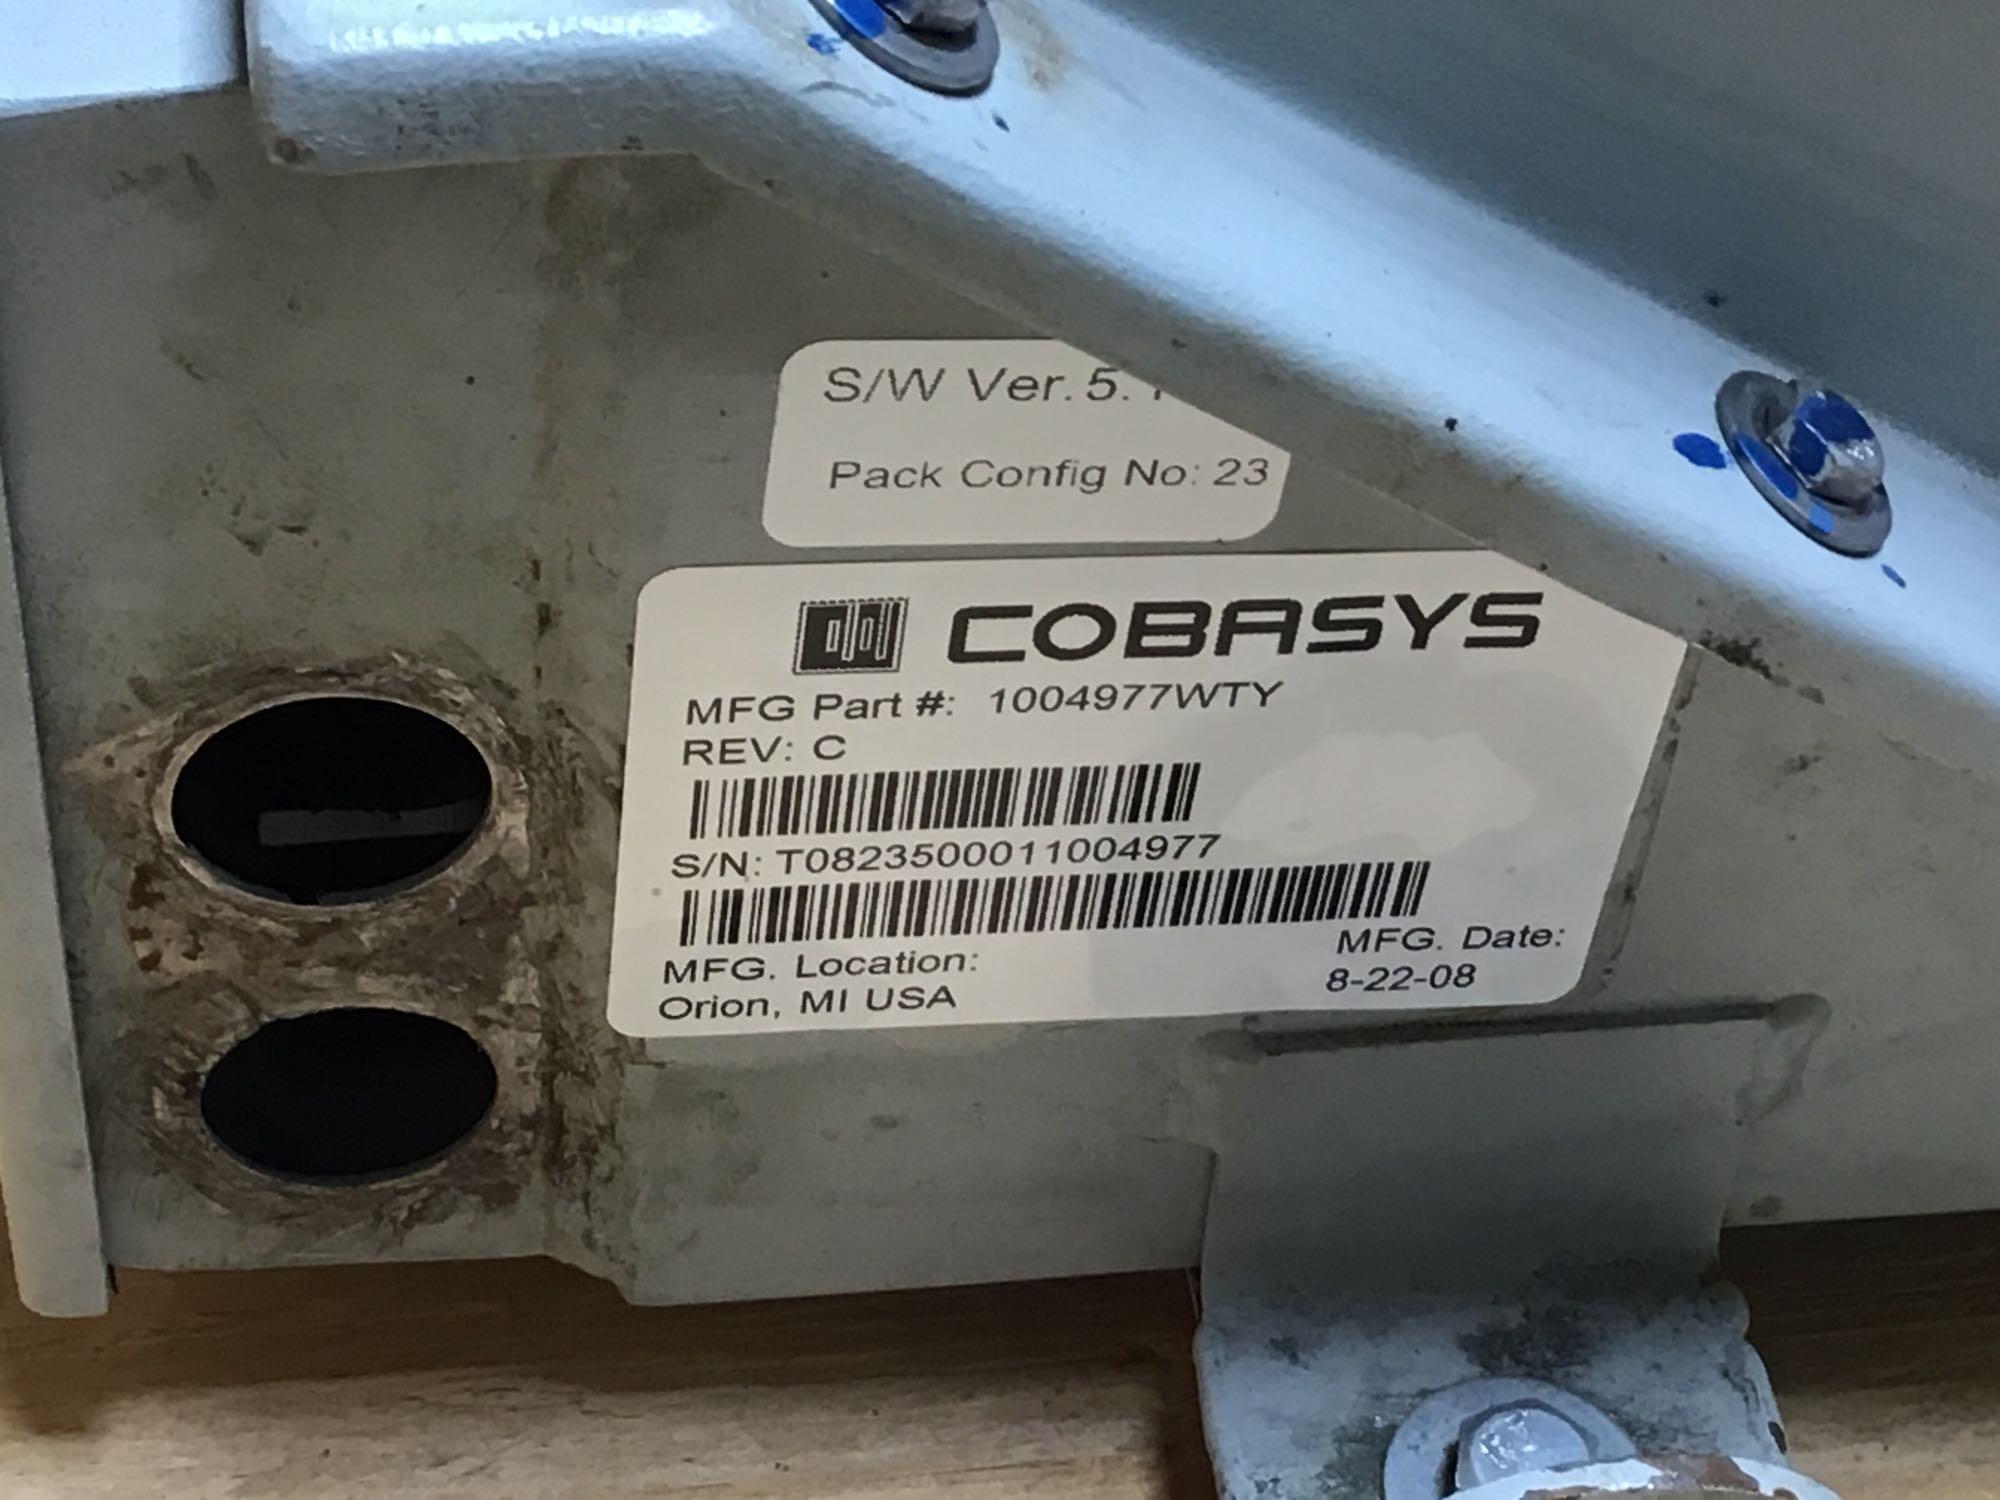 (2) Cobasys 288 Volt Battery Packs